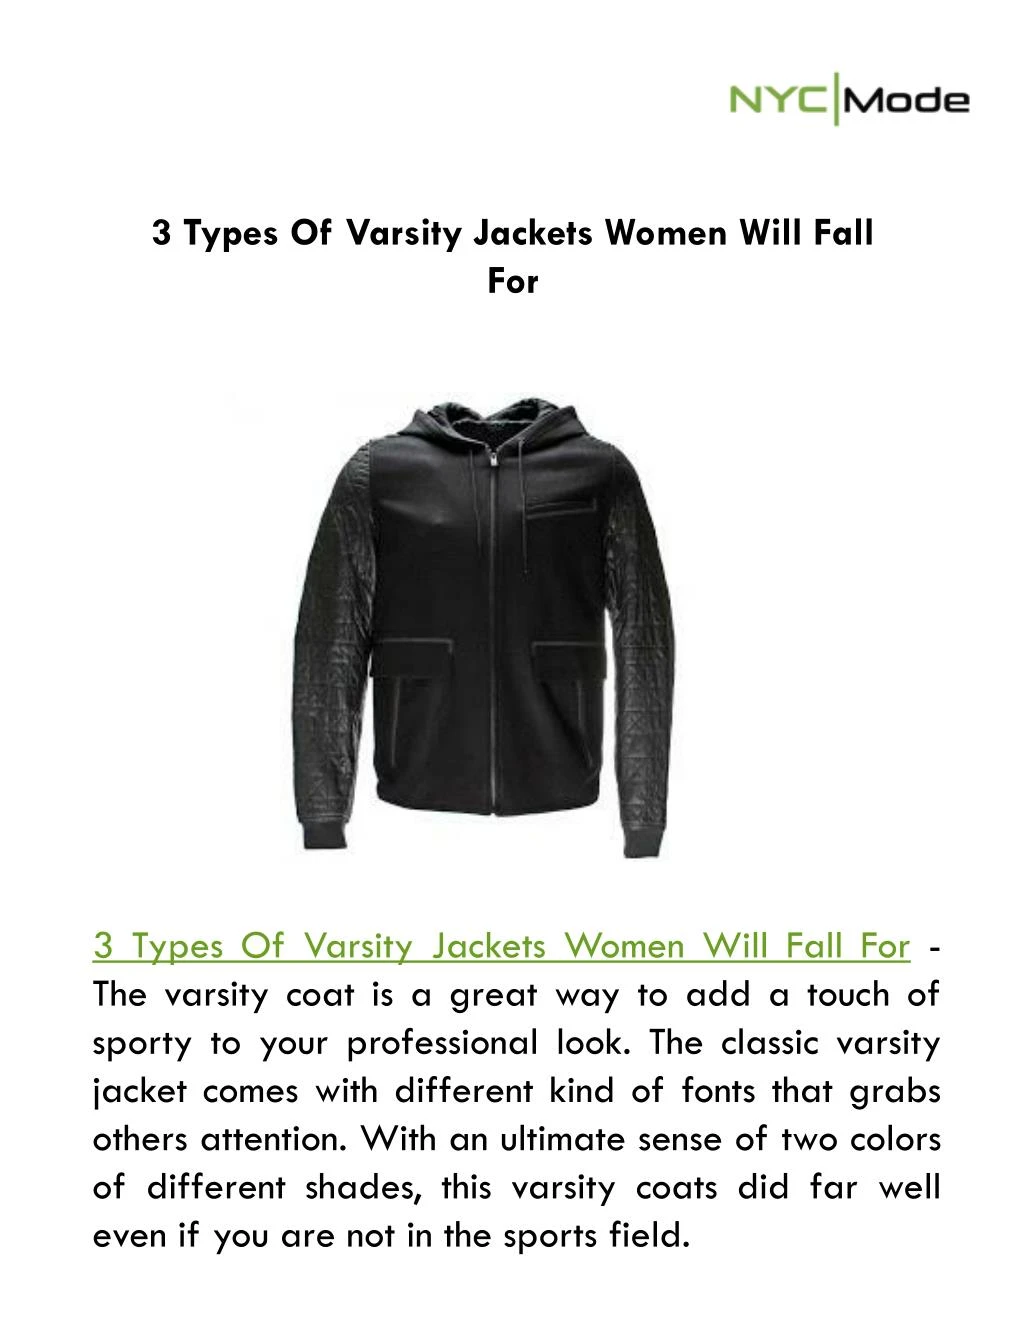 3 types of varsity jackets women will fall for